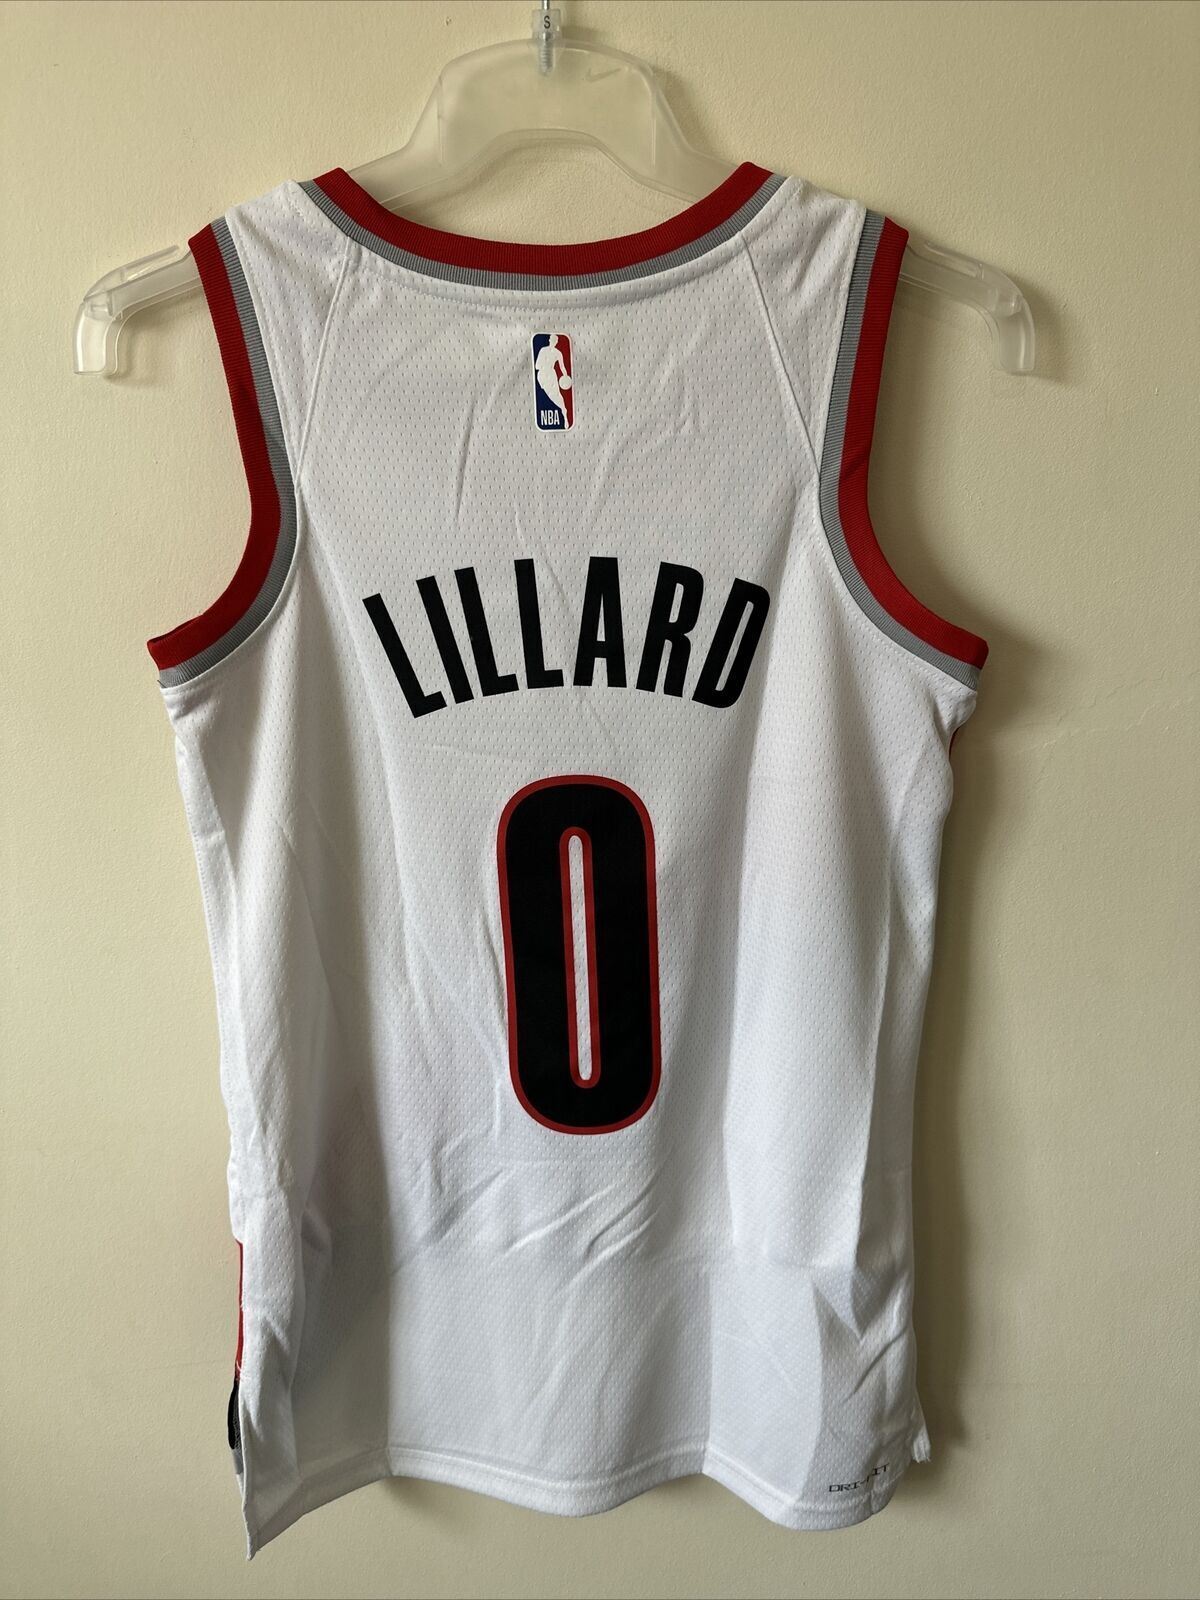 Nike NBA Portland Trail Blazers Association Edition Jersey LILLARD 0  Men’s XS